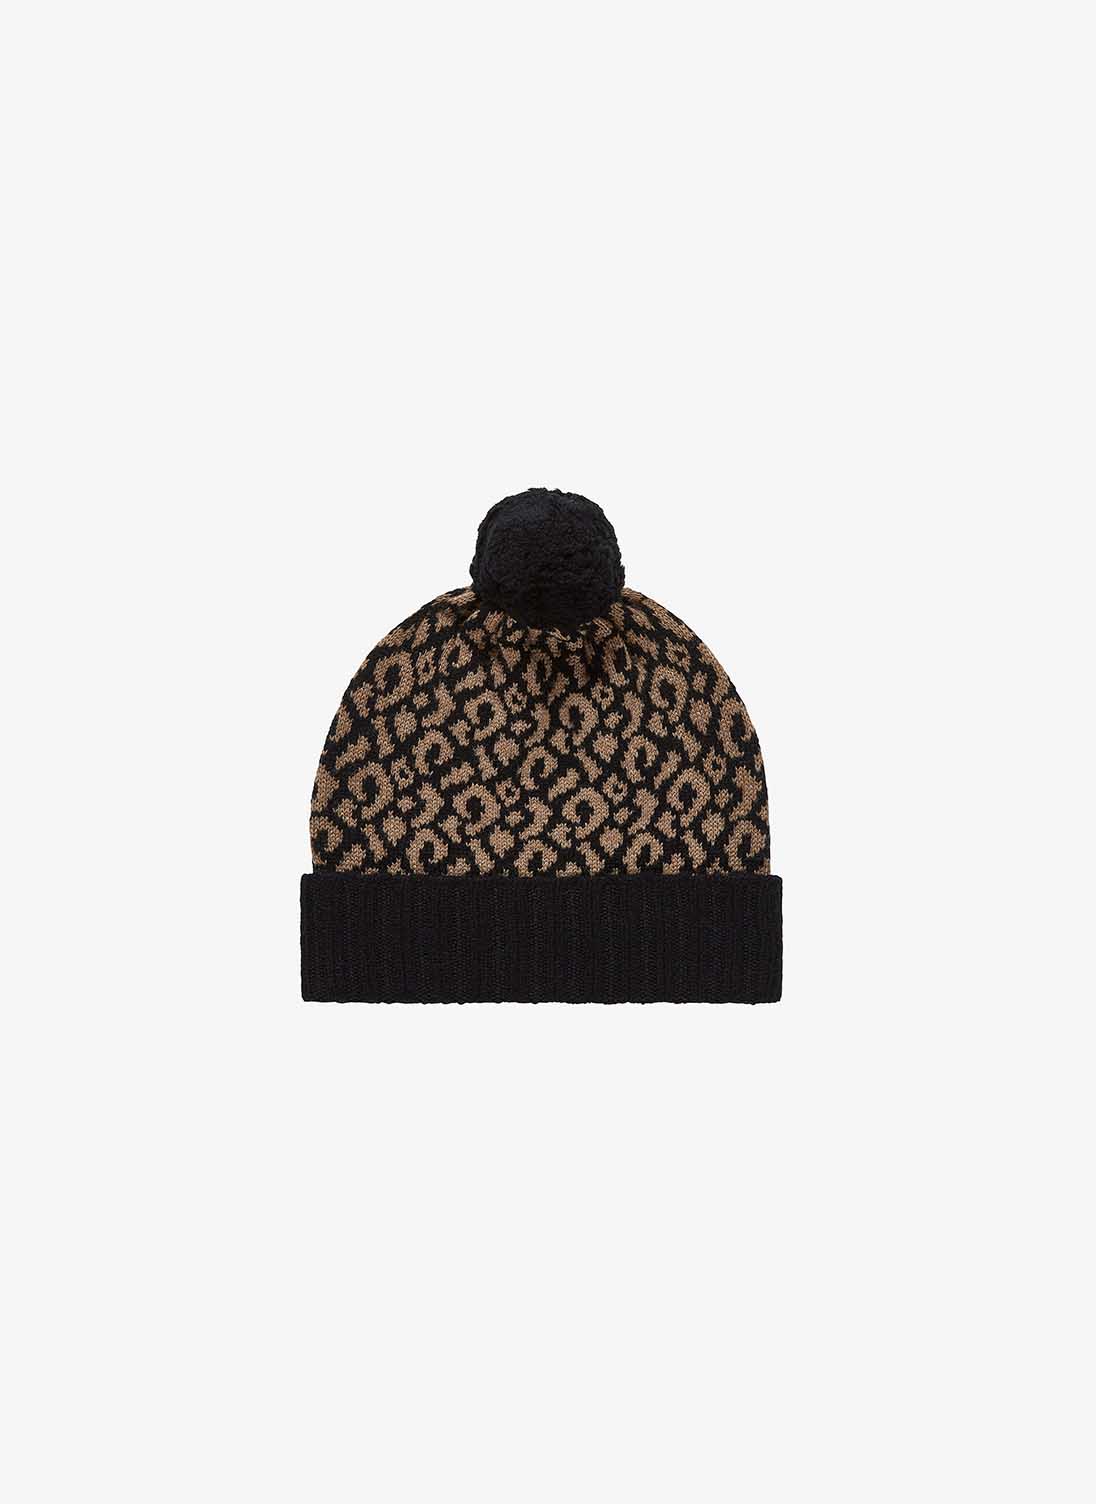 Cashmere Leopard Hat Black & Caramel